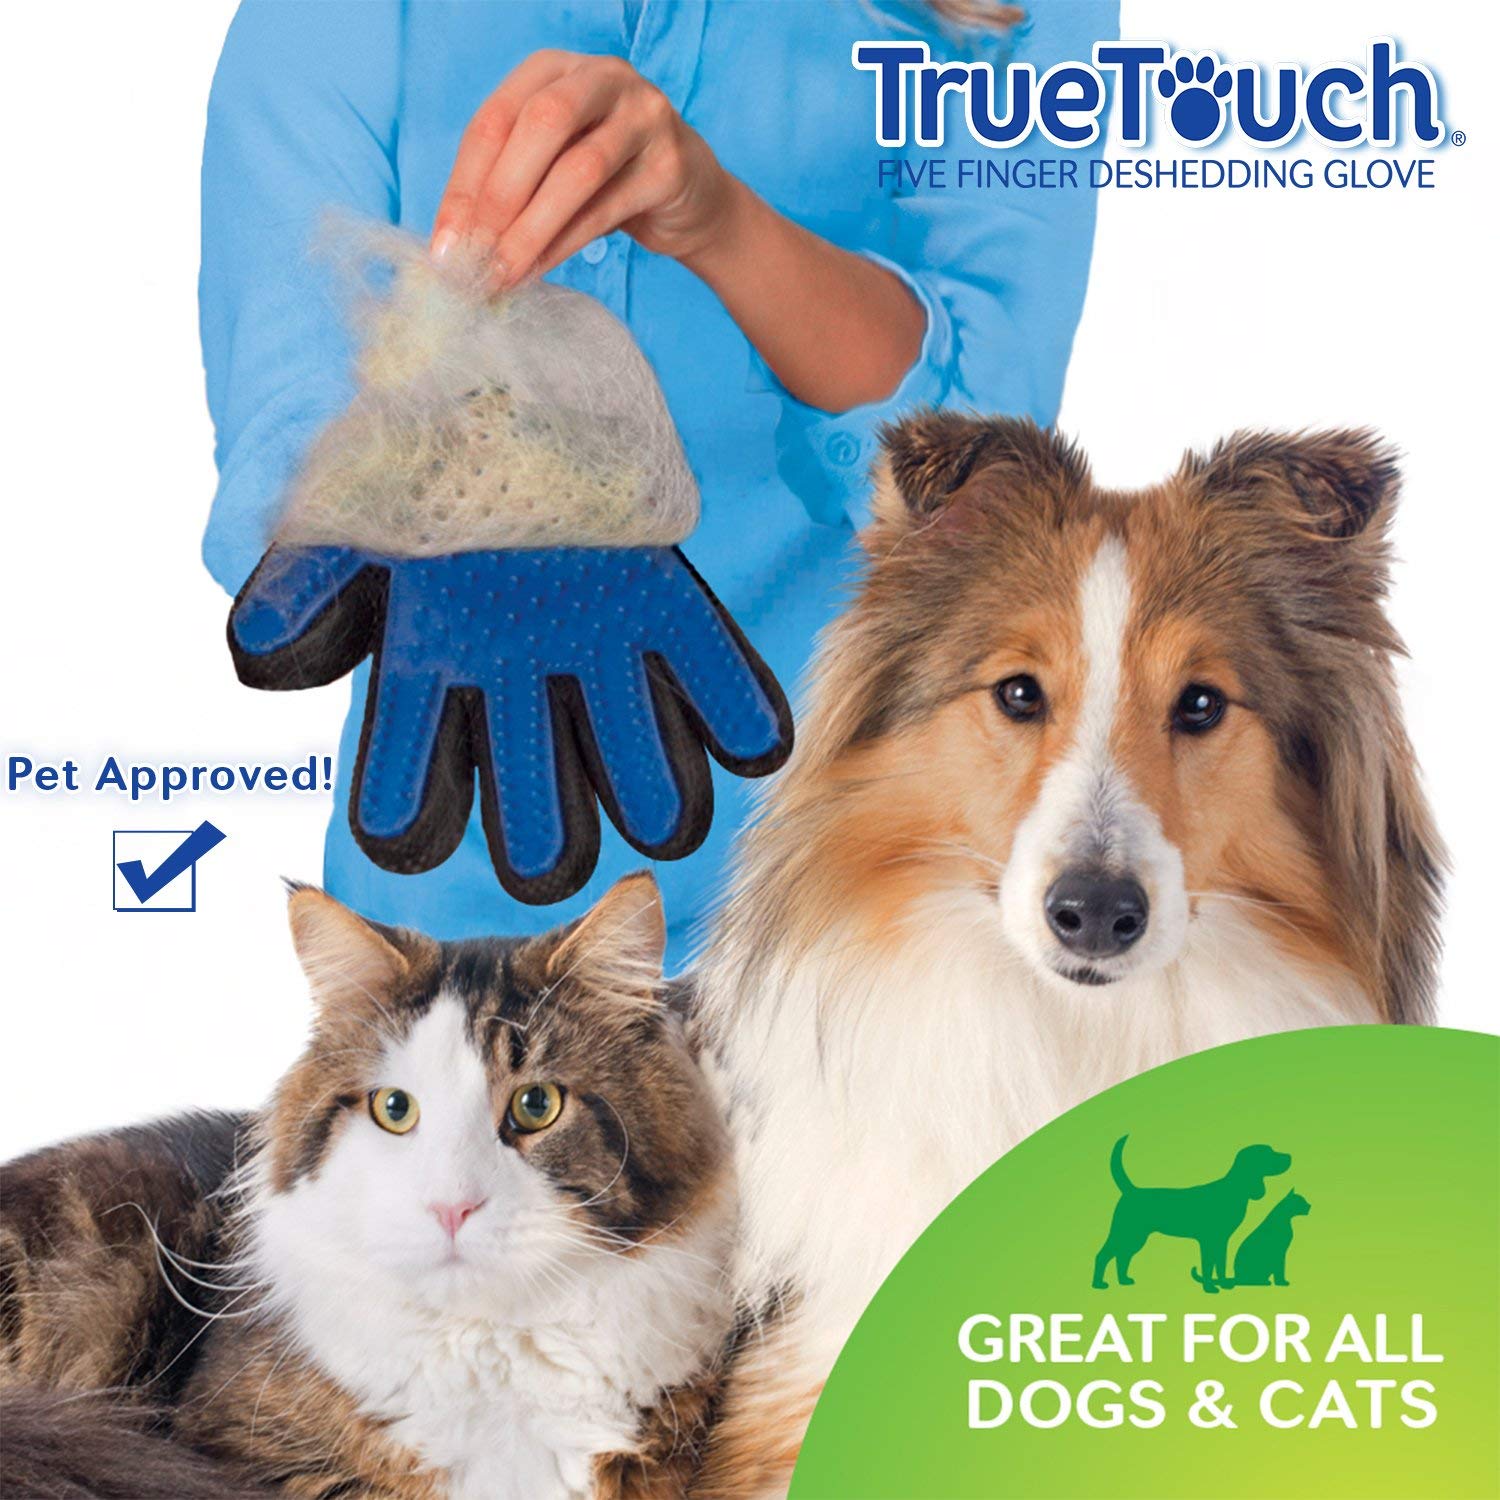 True touch TU011124 Five Finger Deshedding Glove, As Seen On TV